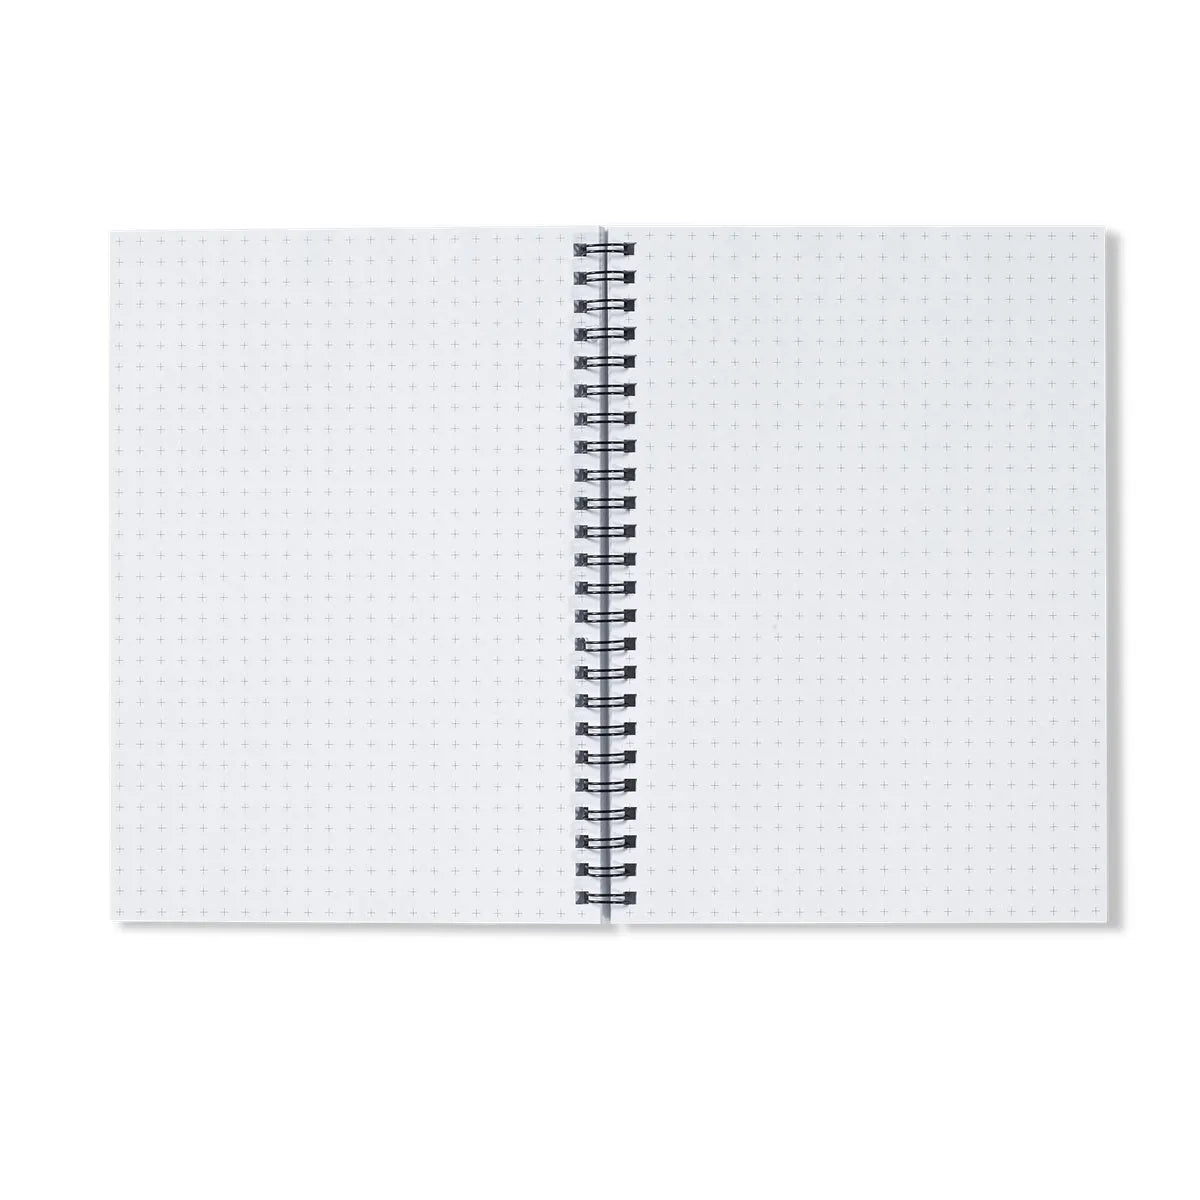 Peacocky Notebook - Notebooks & Notepads - Aesthetic Art